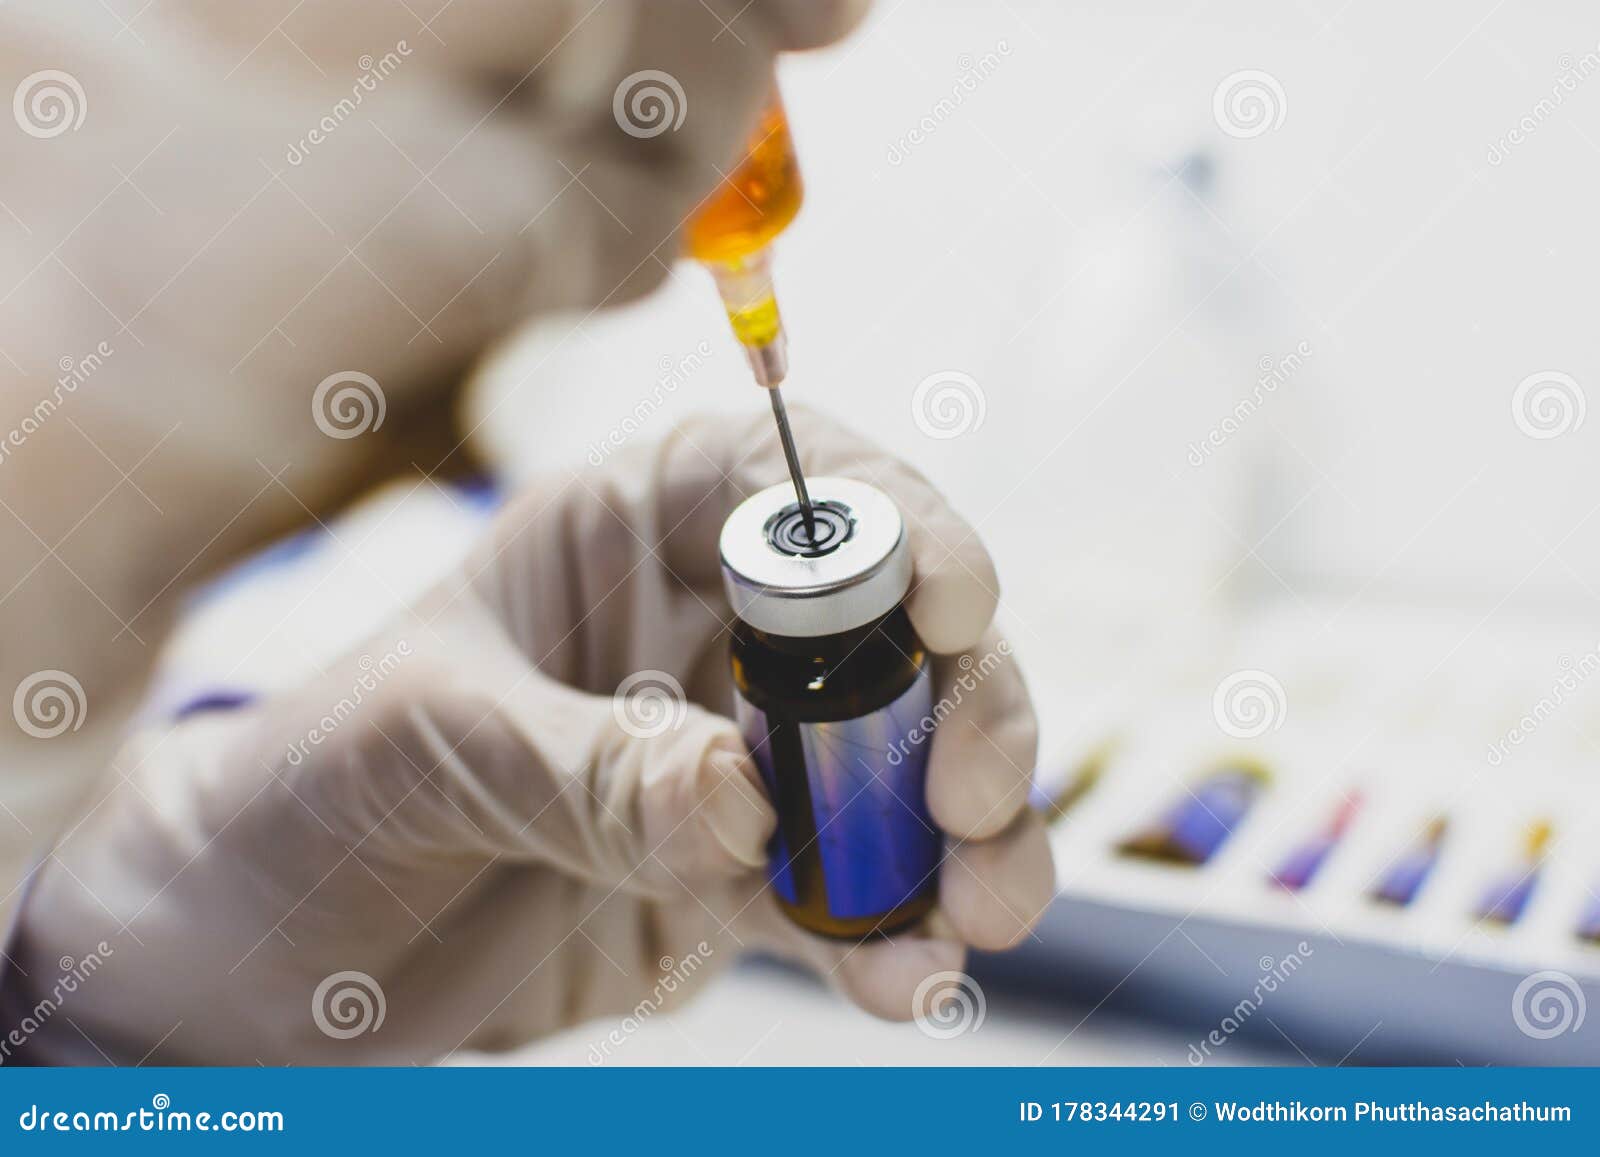 the doctor hand using syringe sucking medicine from drug vial bottle.